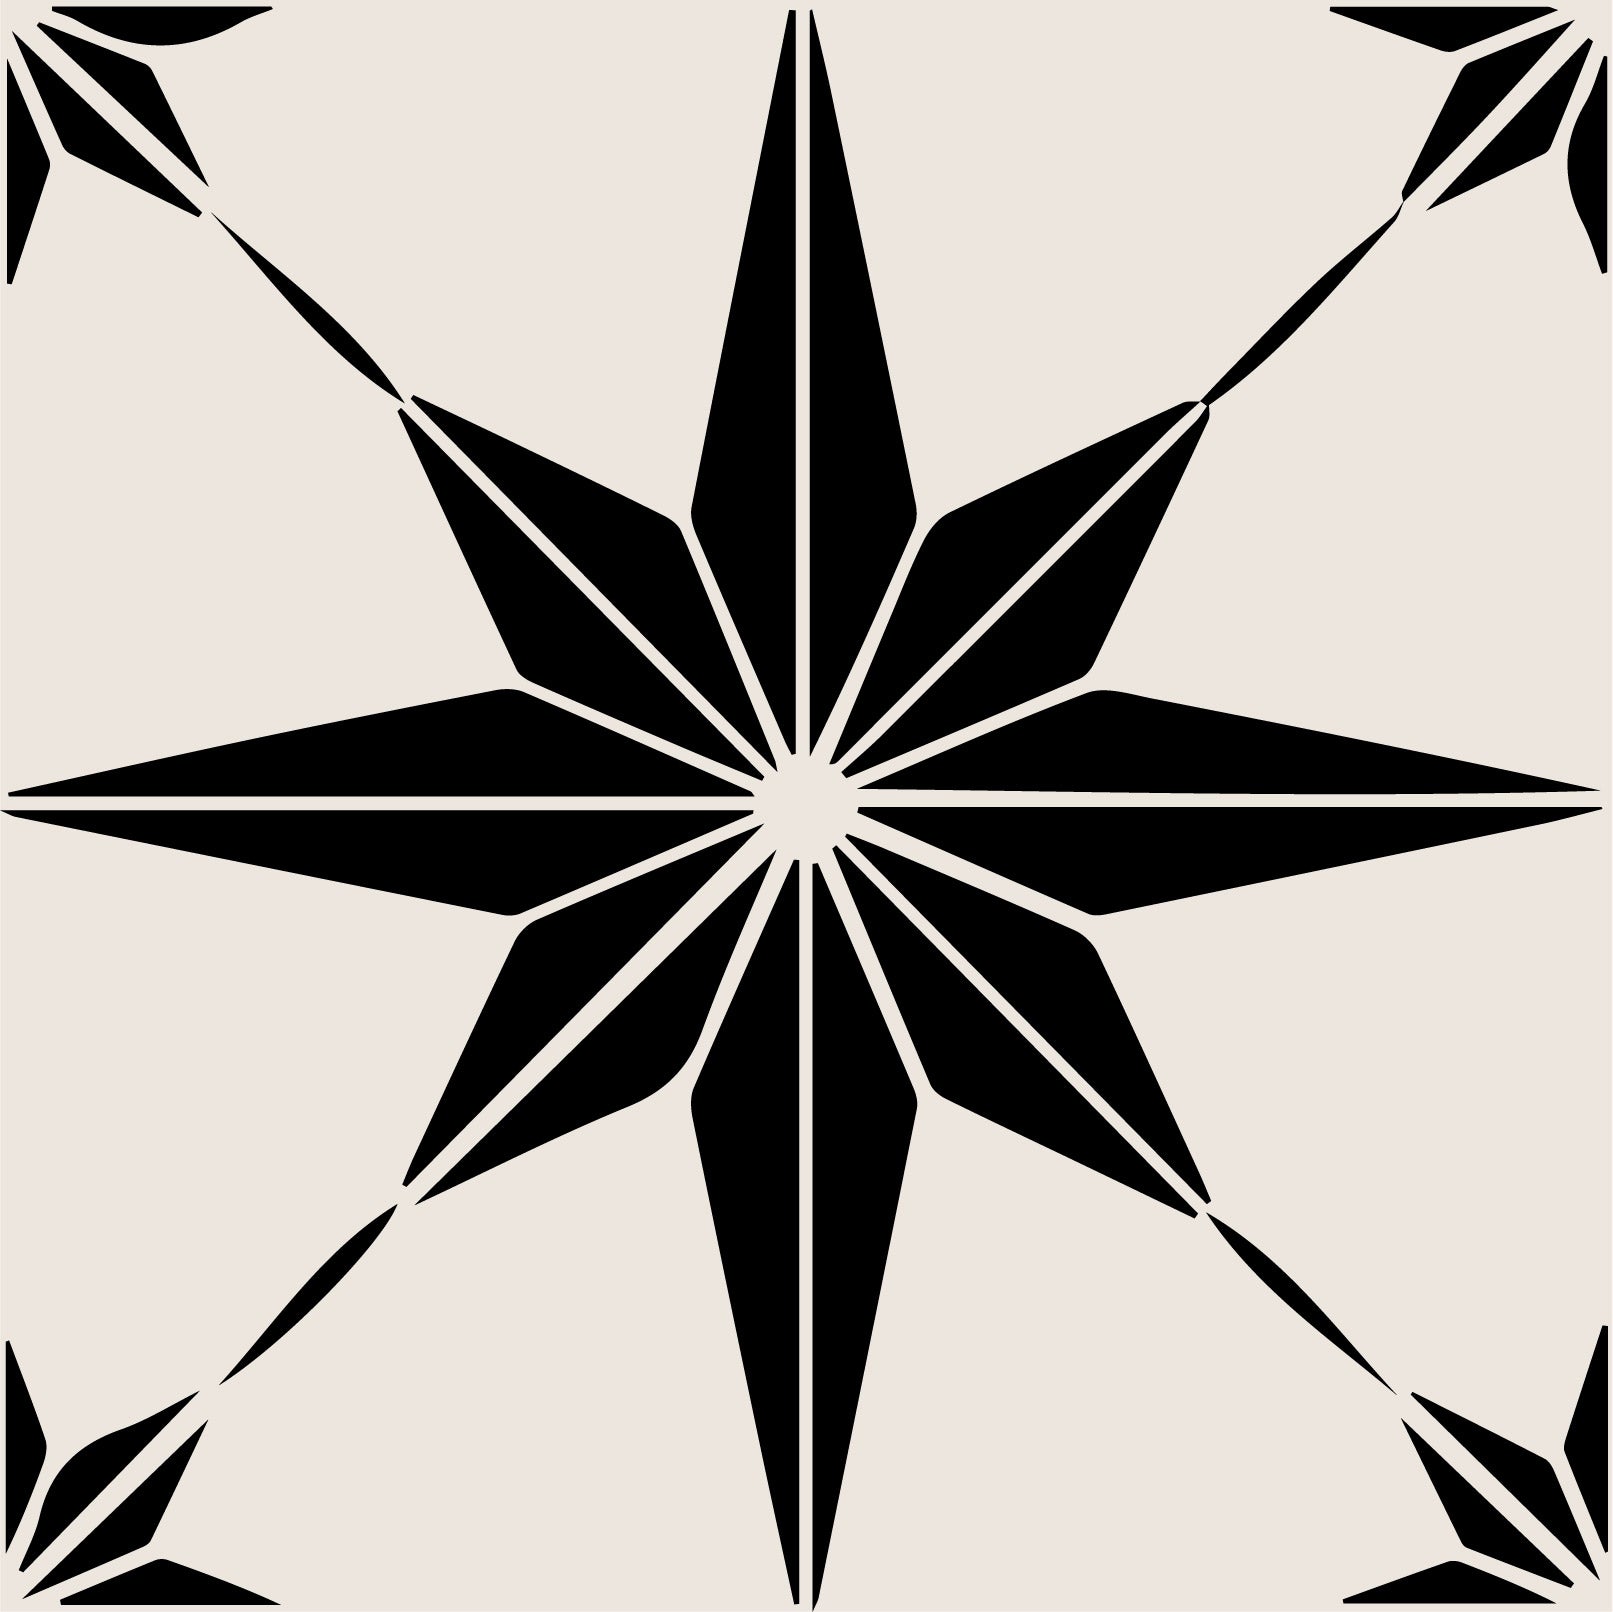 4" x 4" Black and White Mono Cross Peel and Stick Tiles - Tuesday Morning-Peel and Stick Tiles